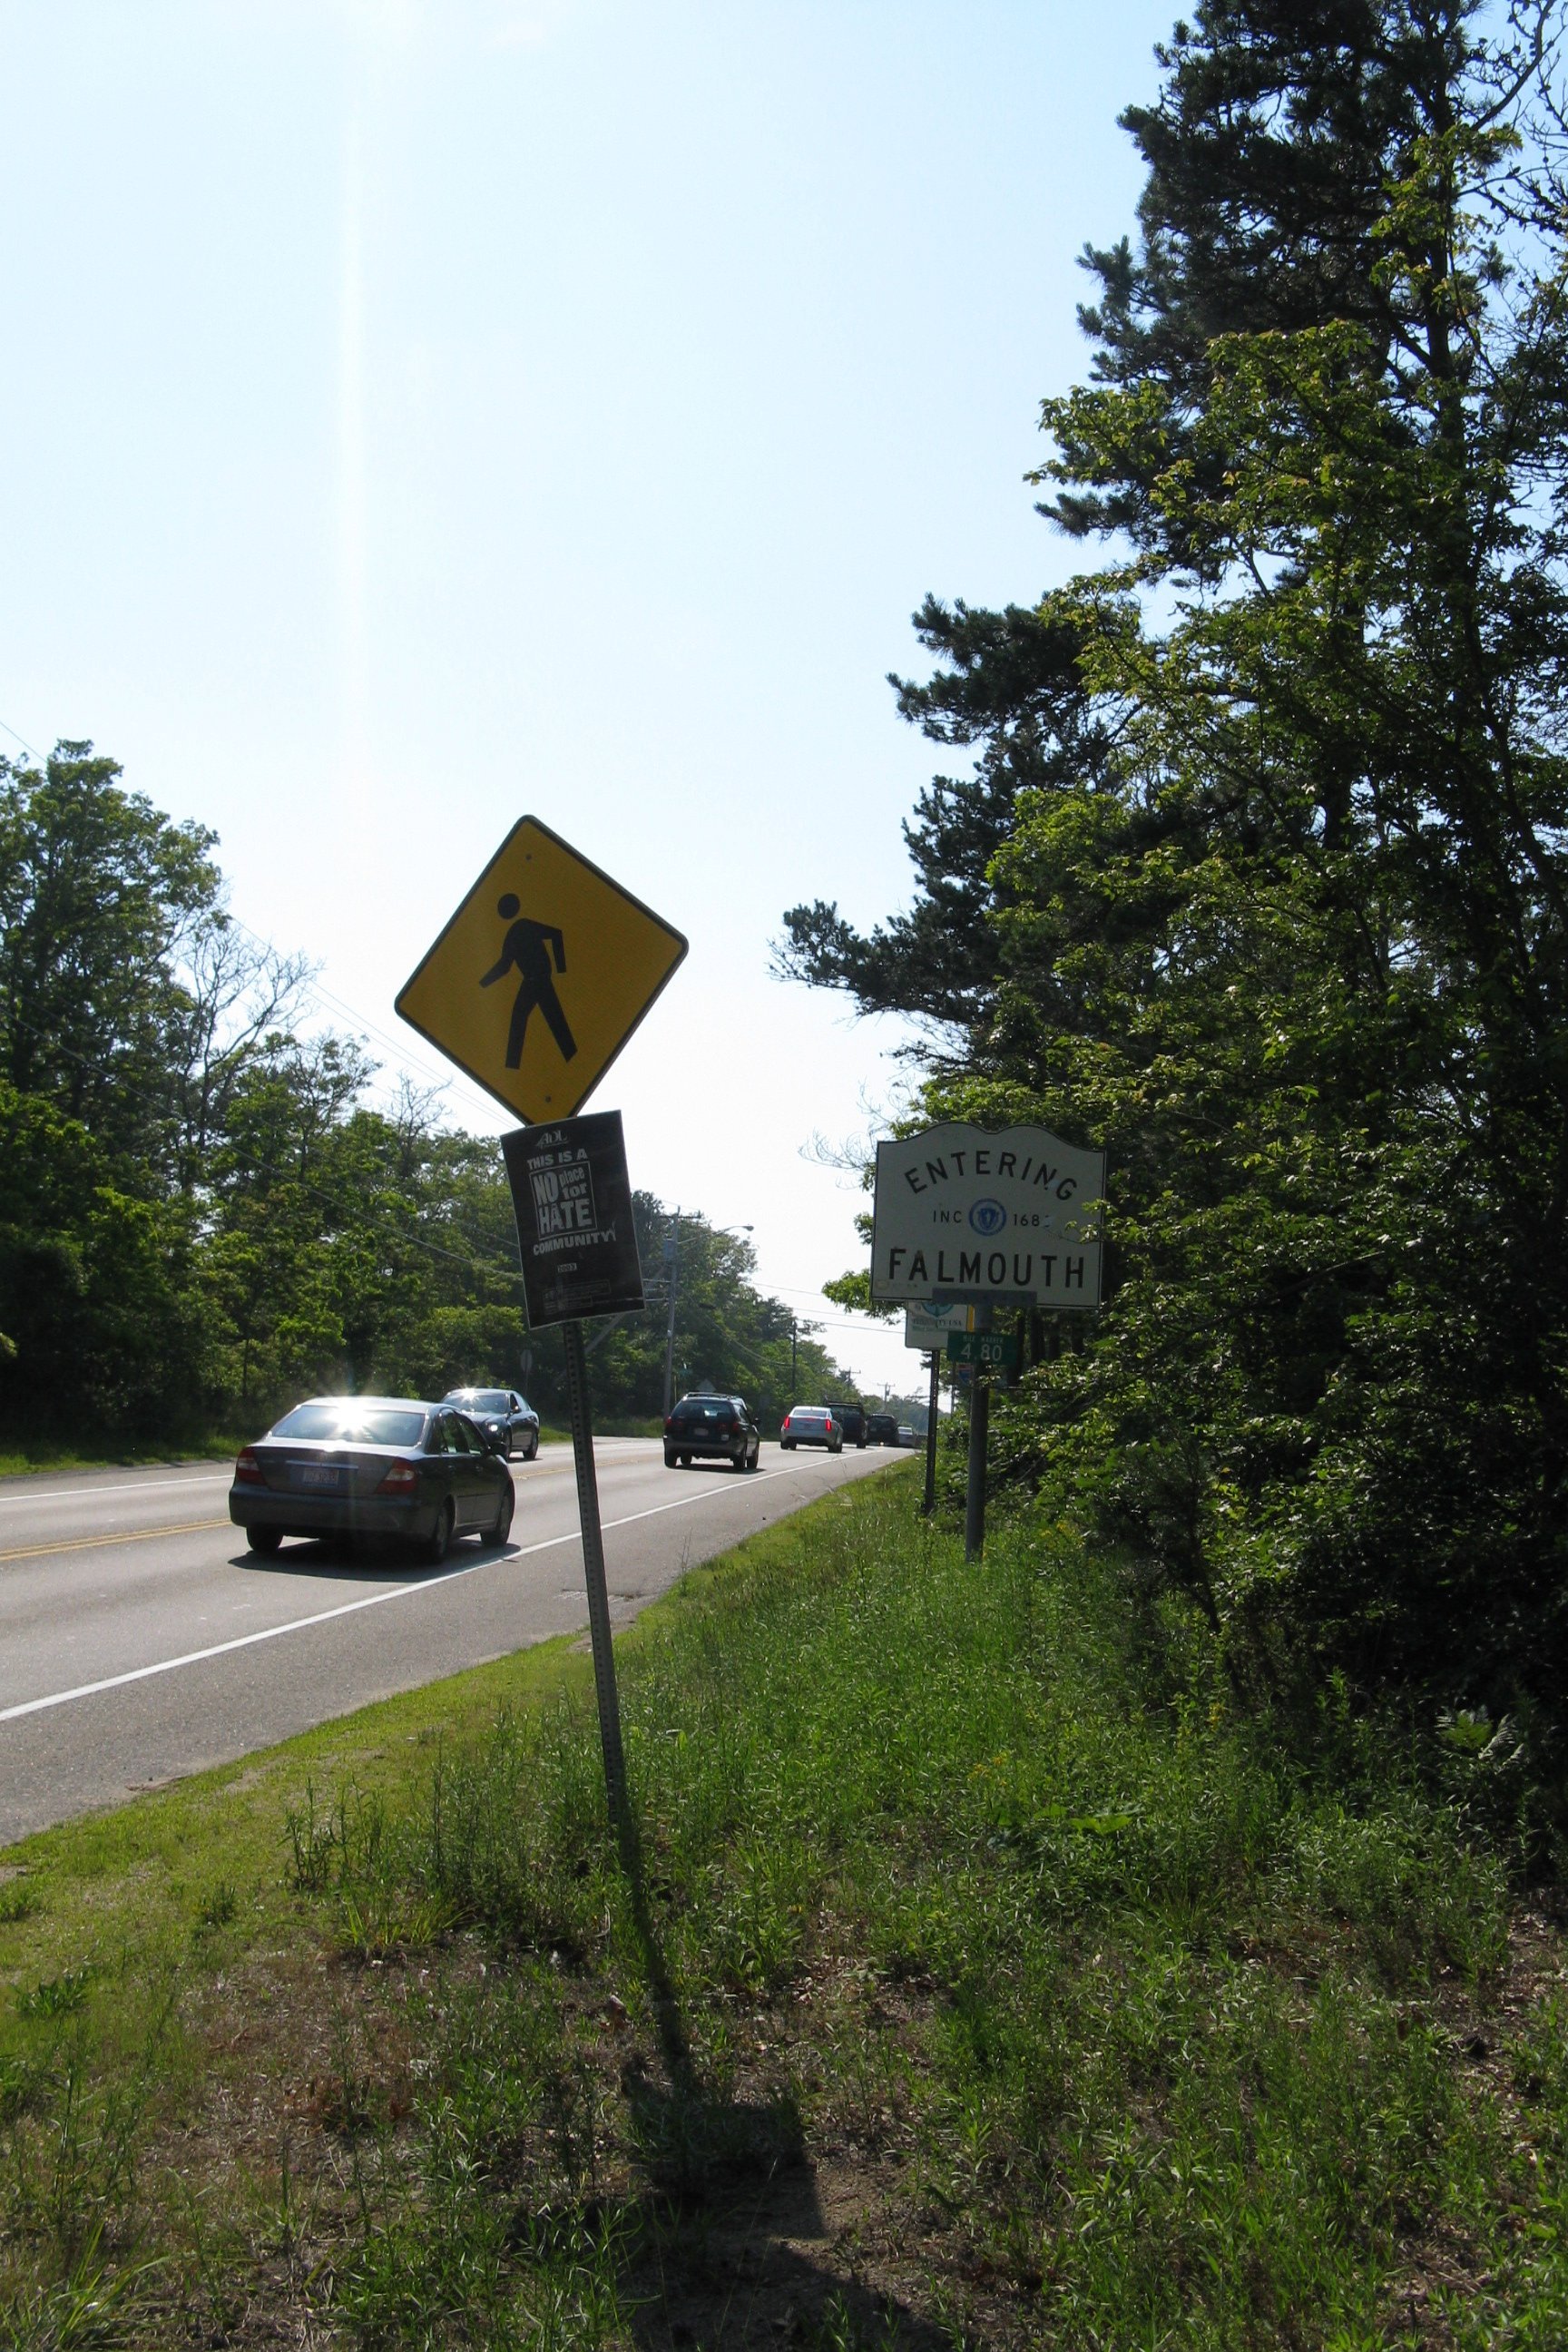 Massachusetts Route 151